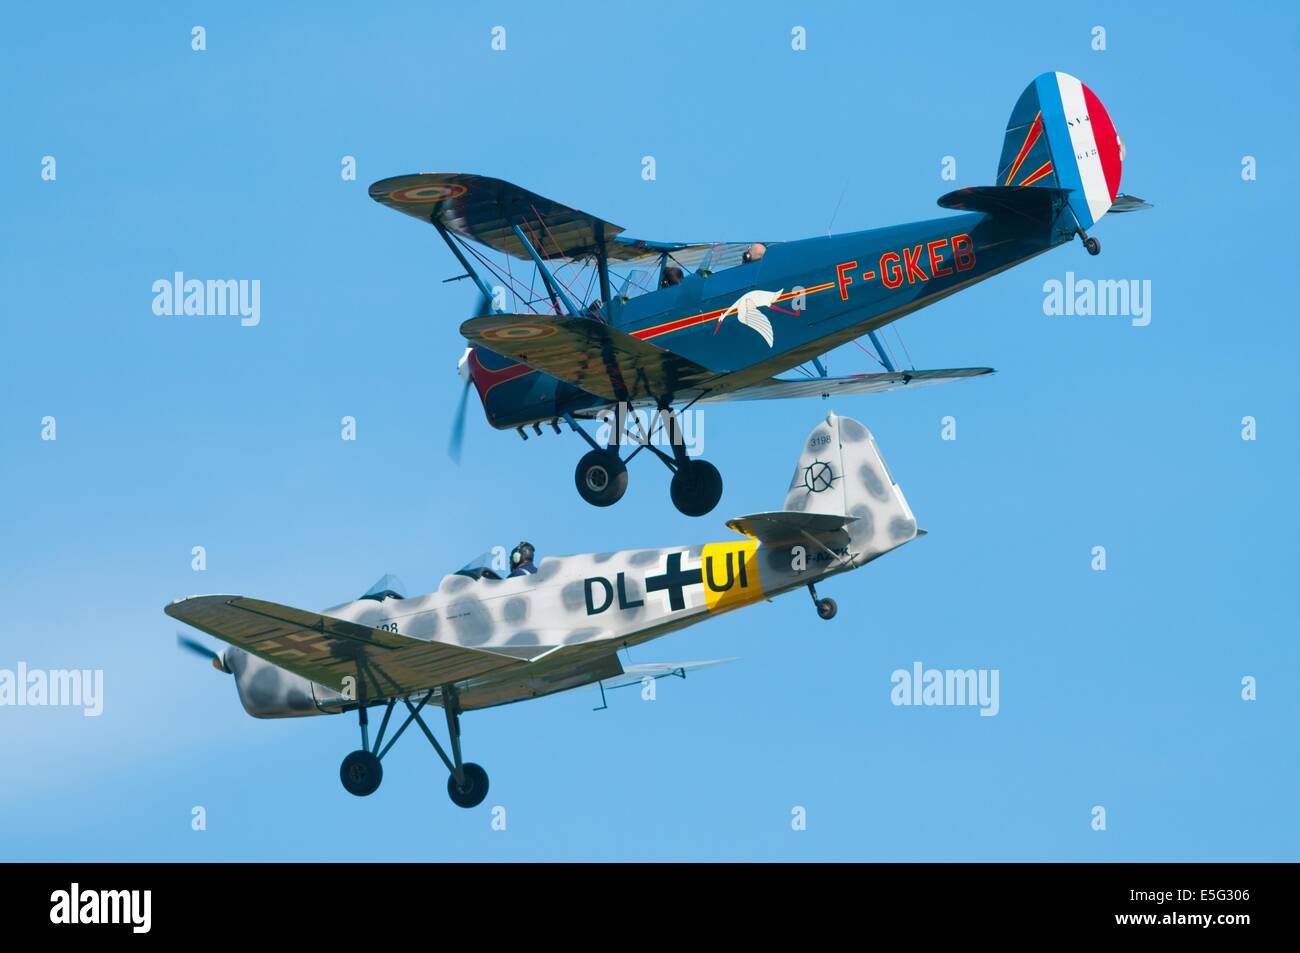 Un biplan Stampe SV-4c et Klemm KL-35D volant en formation, France Banque D'Images